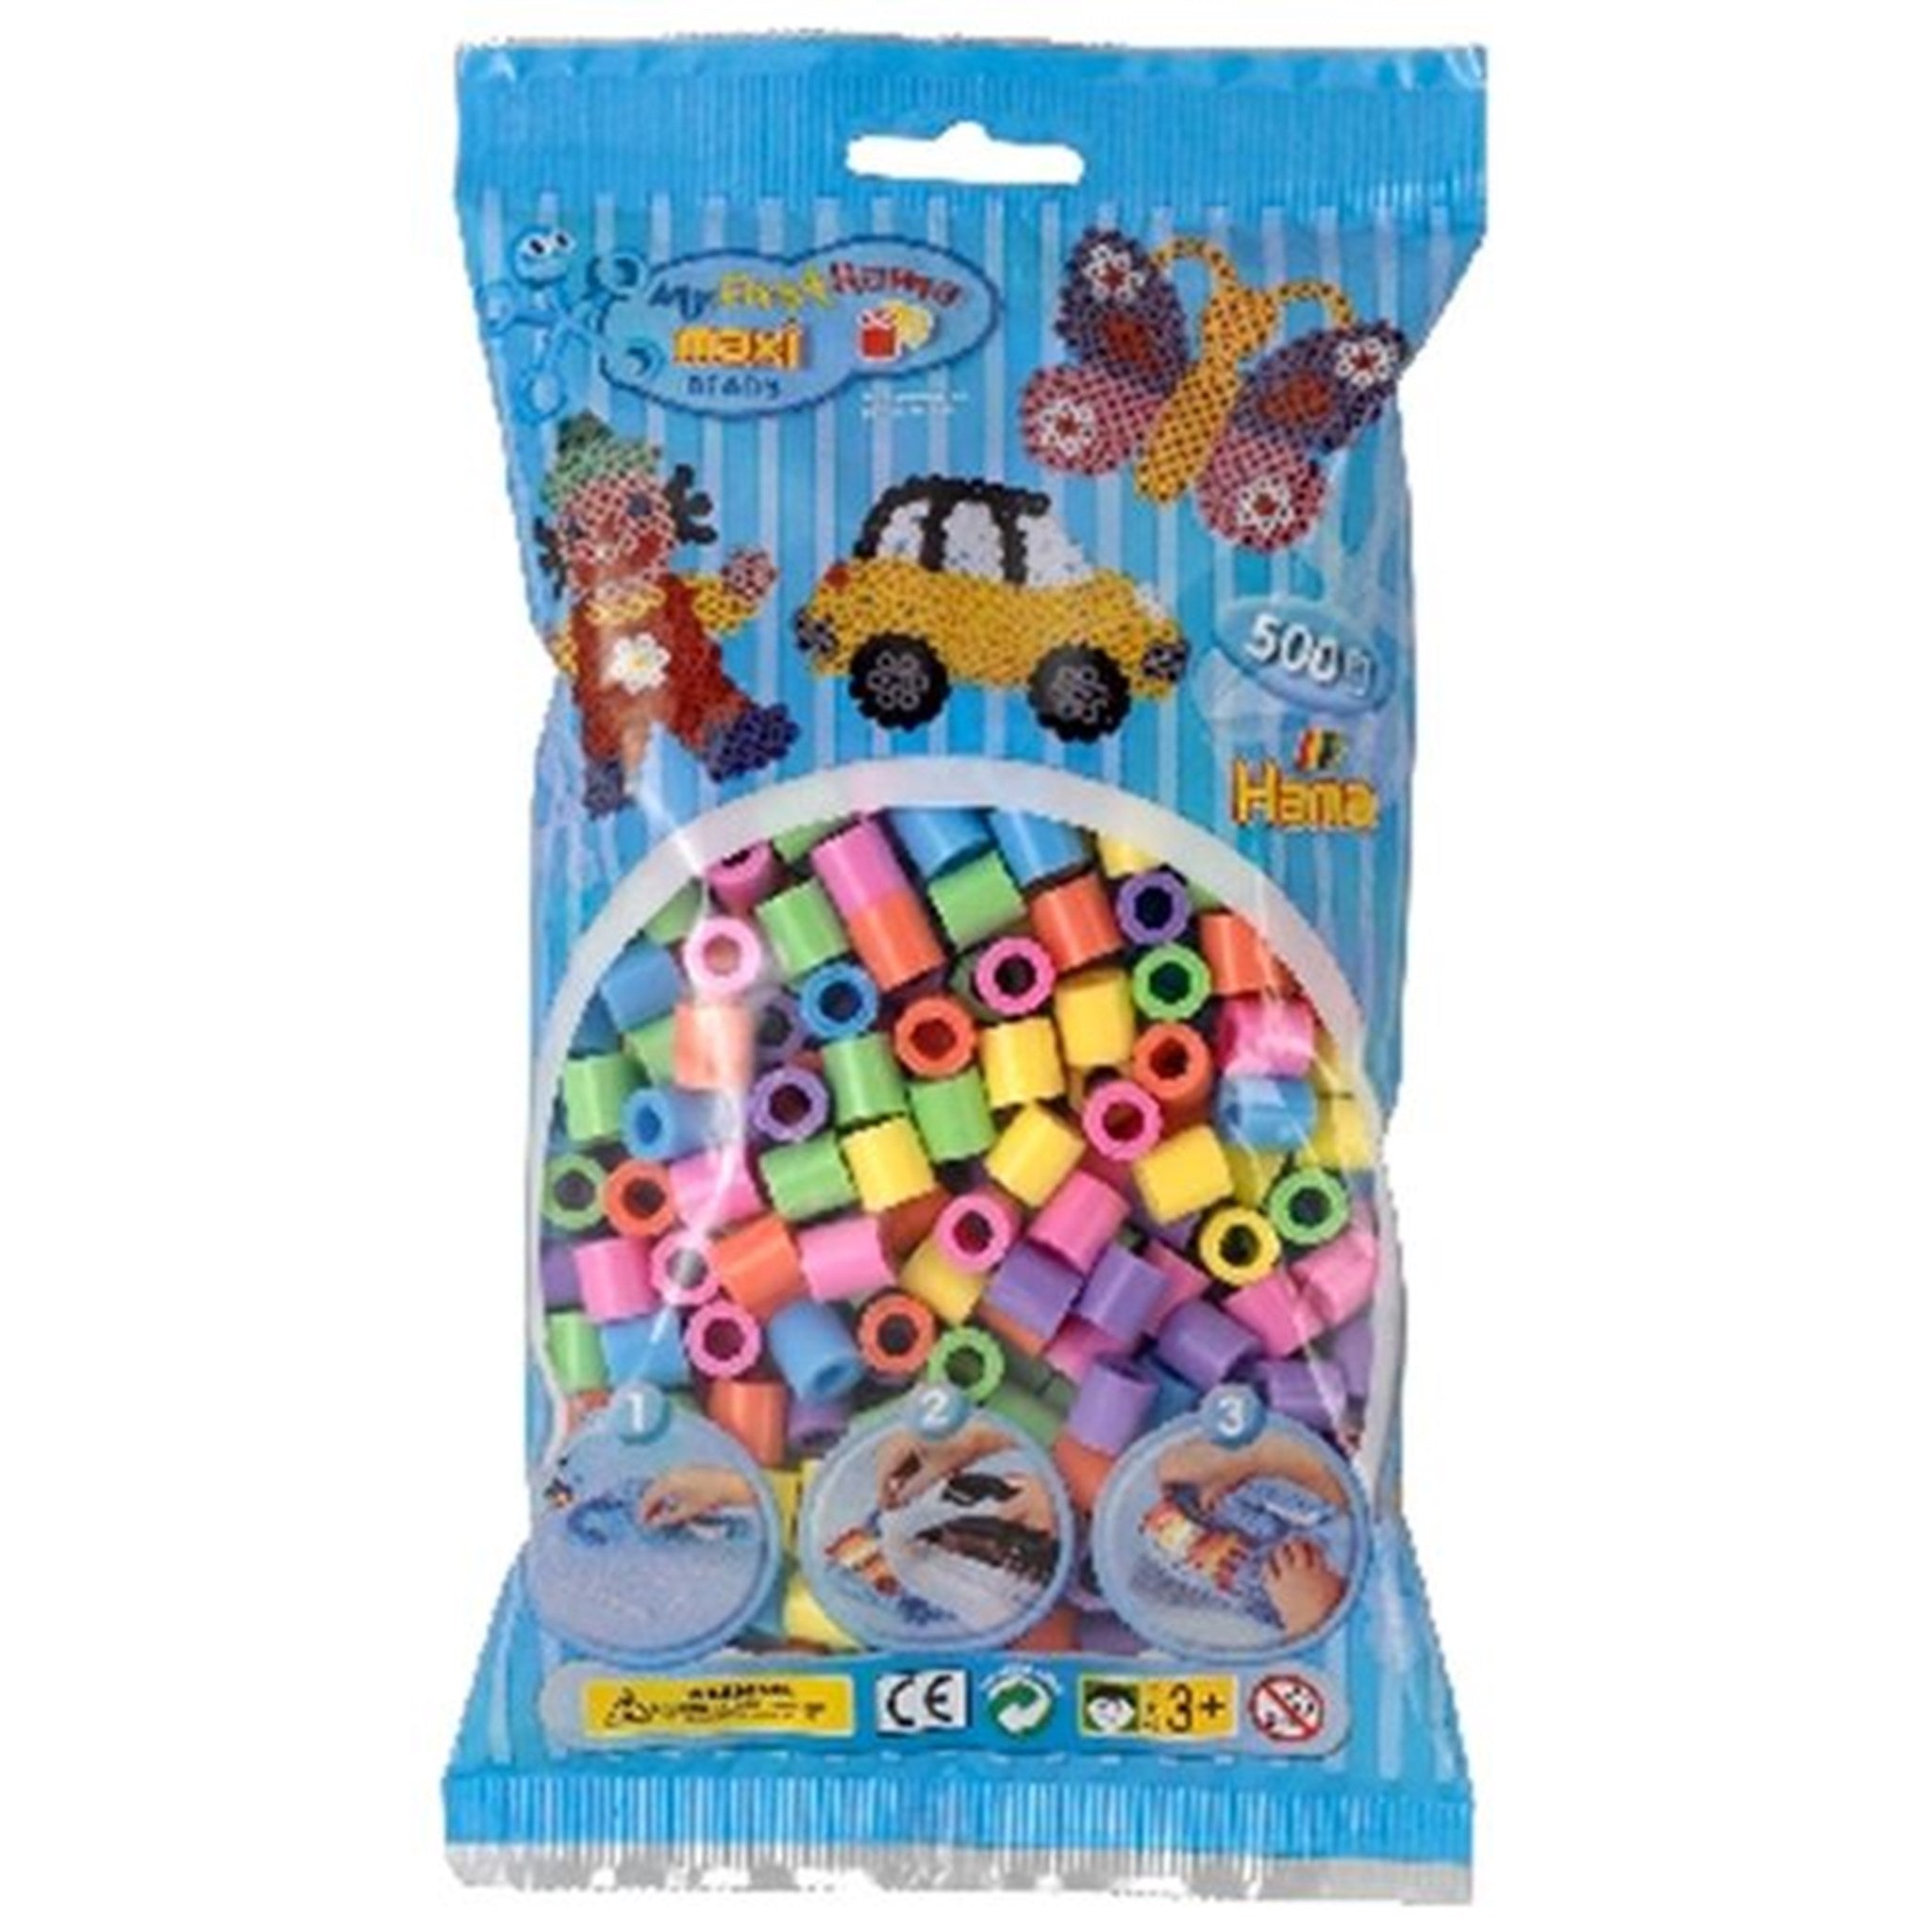 HAMA Maxi Beads 500 pcs Pastel Mix